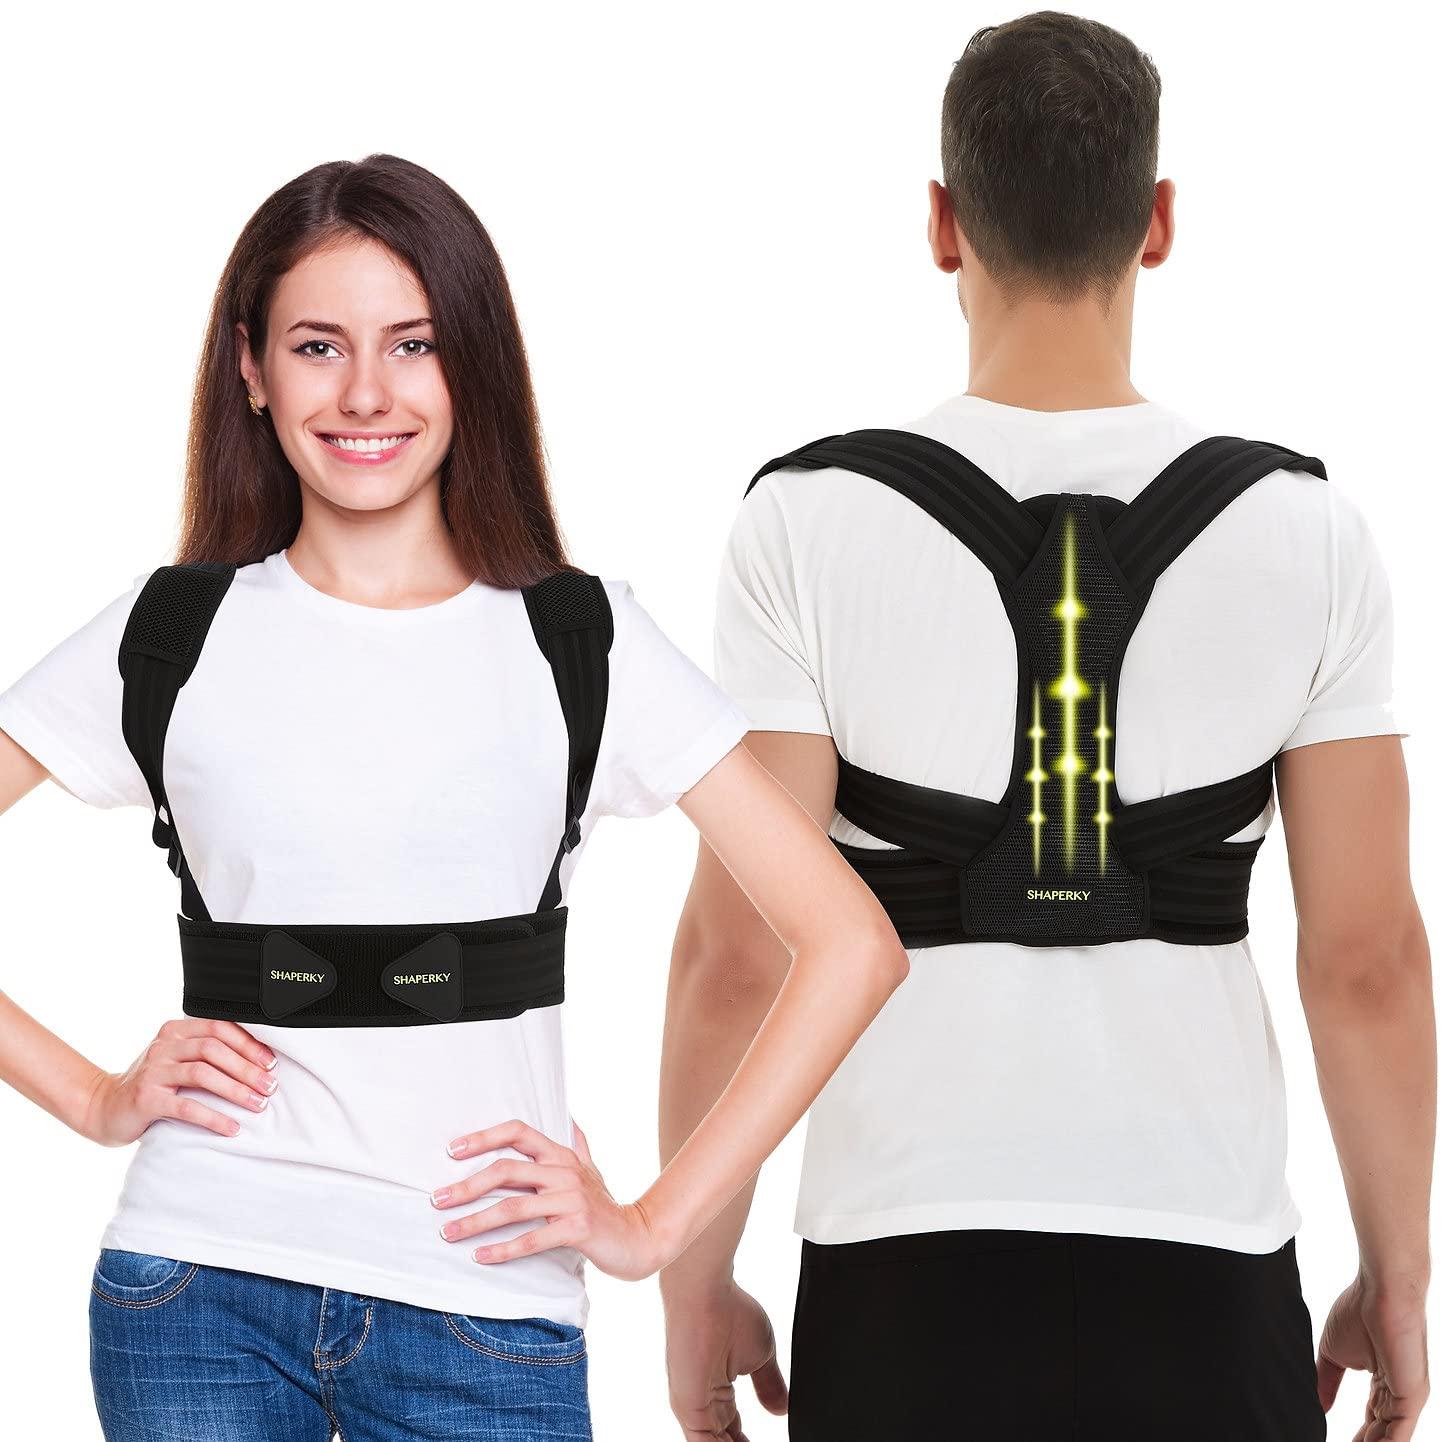 SHAPERKY Posture Corrector for Men and Women, Adjustable Upper